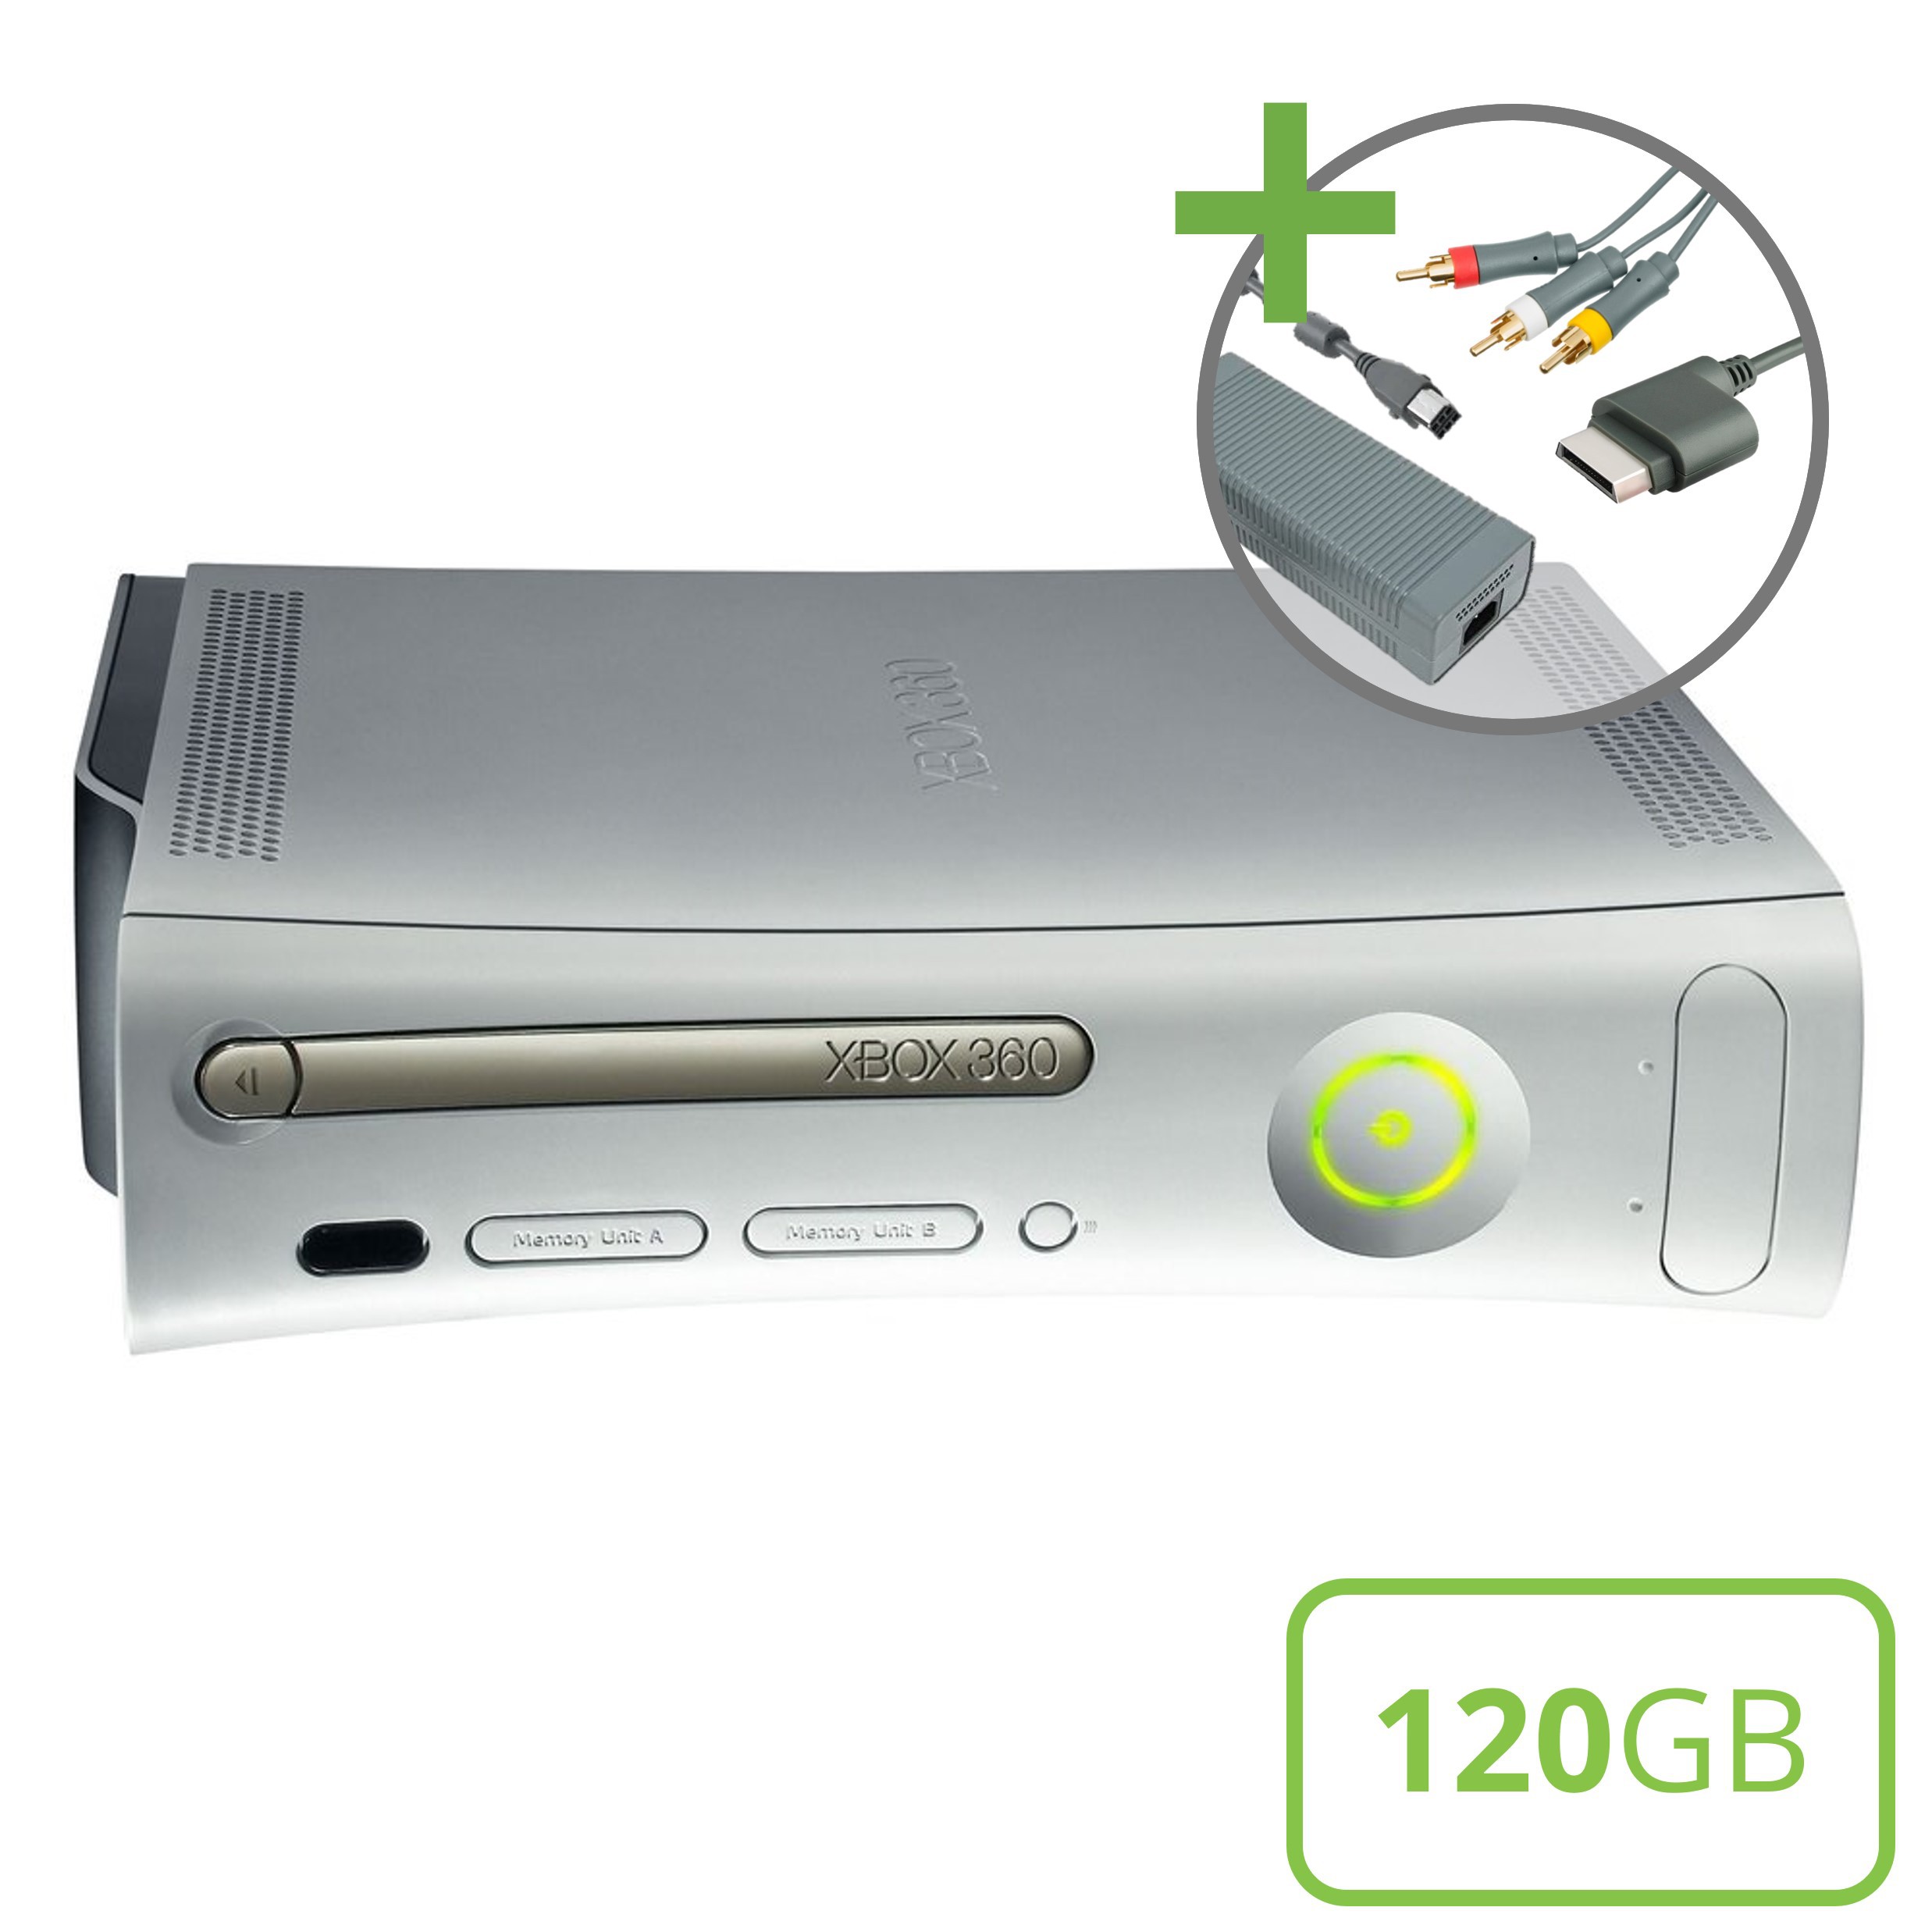 Microsoft Xbox 360 Premium Console (AV) - 120GB - Xbox 360 Hardware - 2